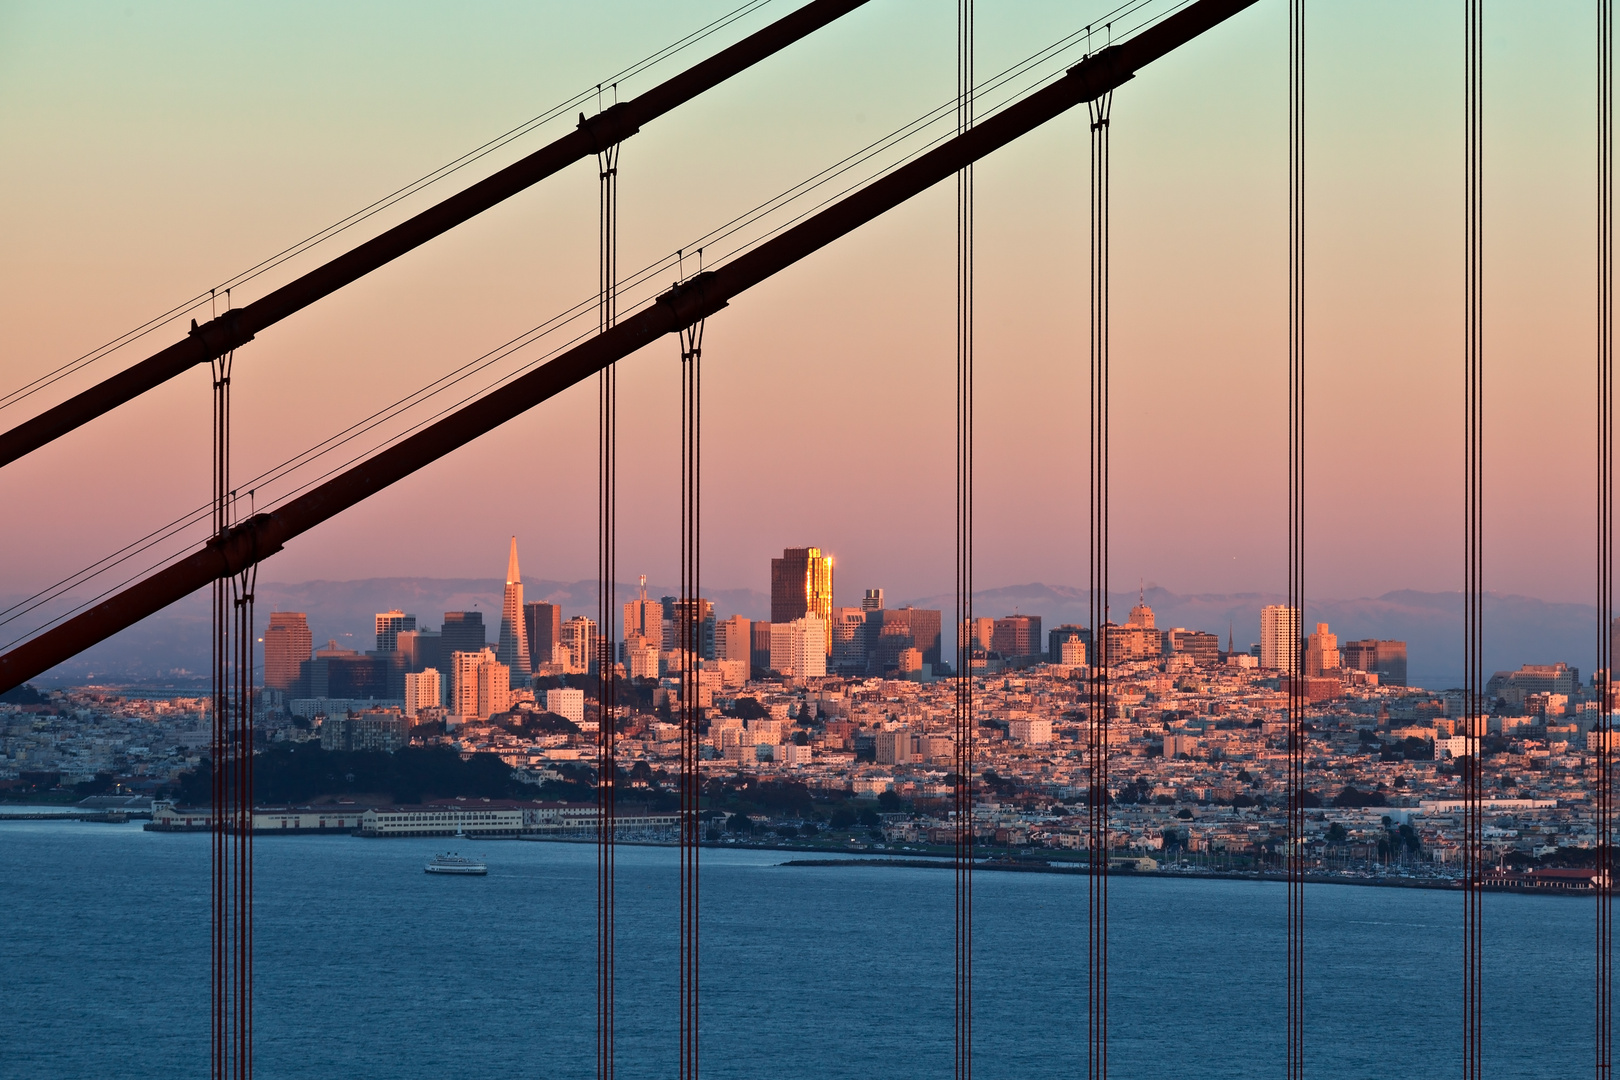 Golden Gate (mal anders)